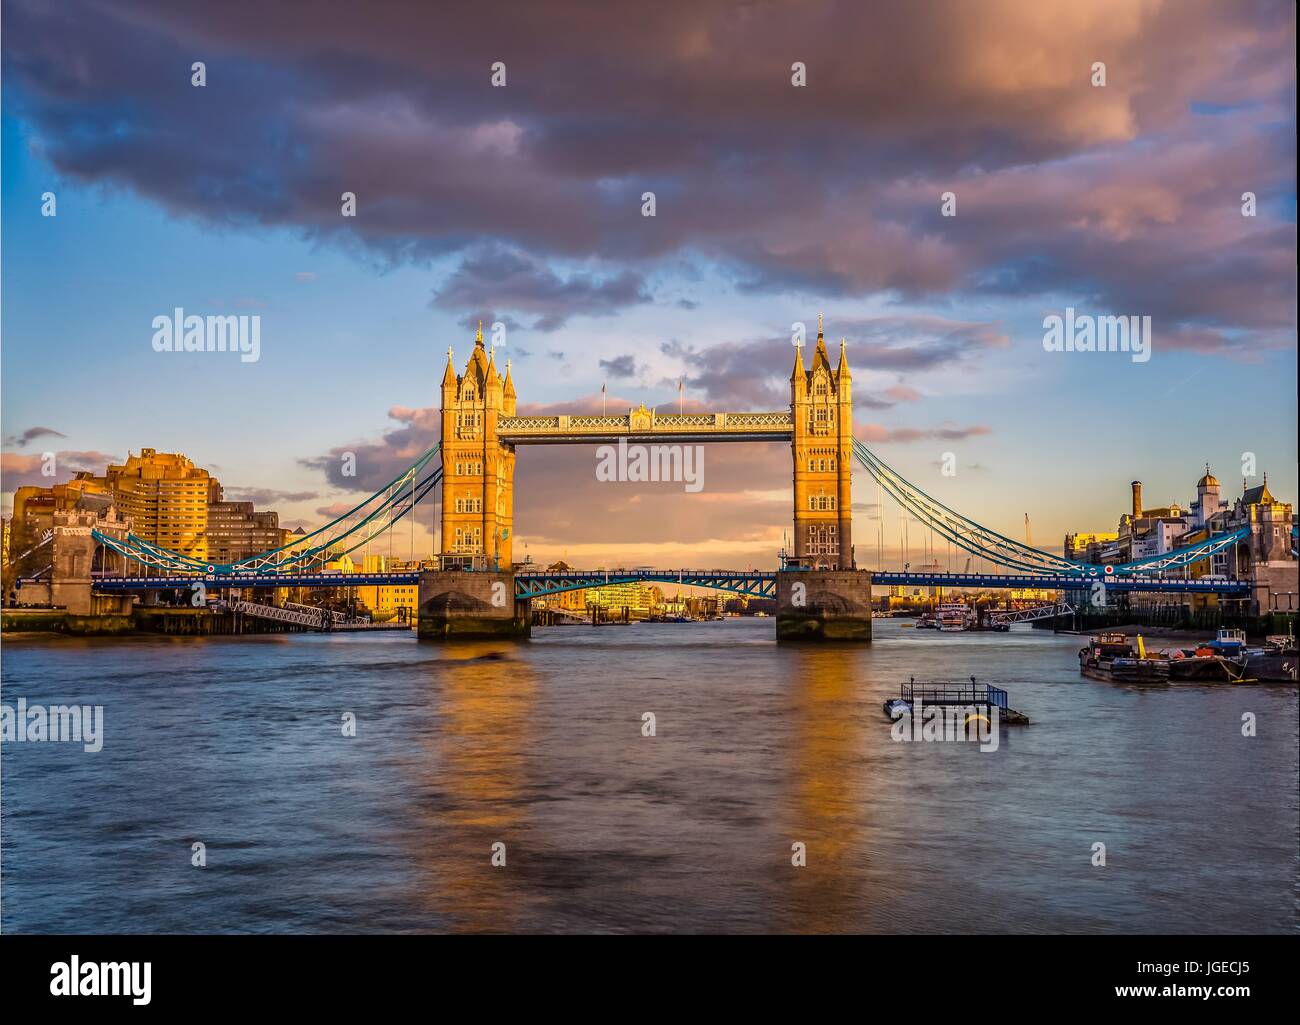 Tower bridge Stockfoto